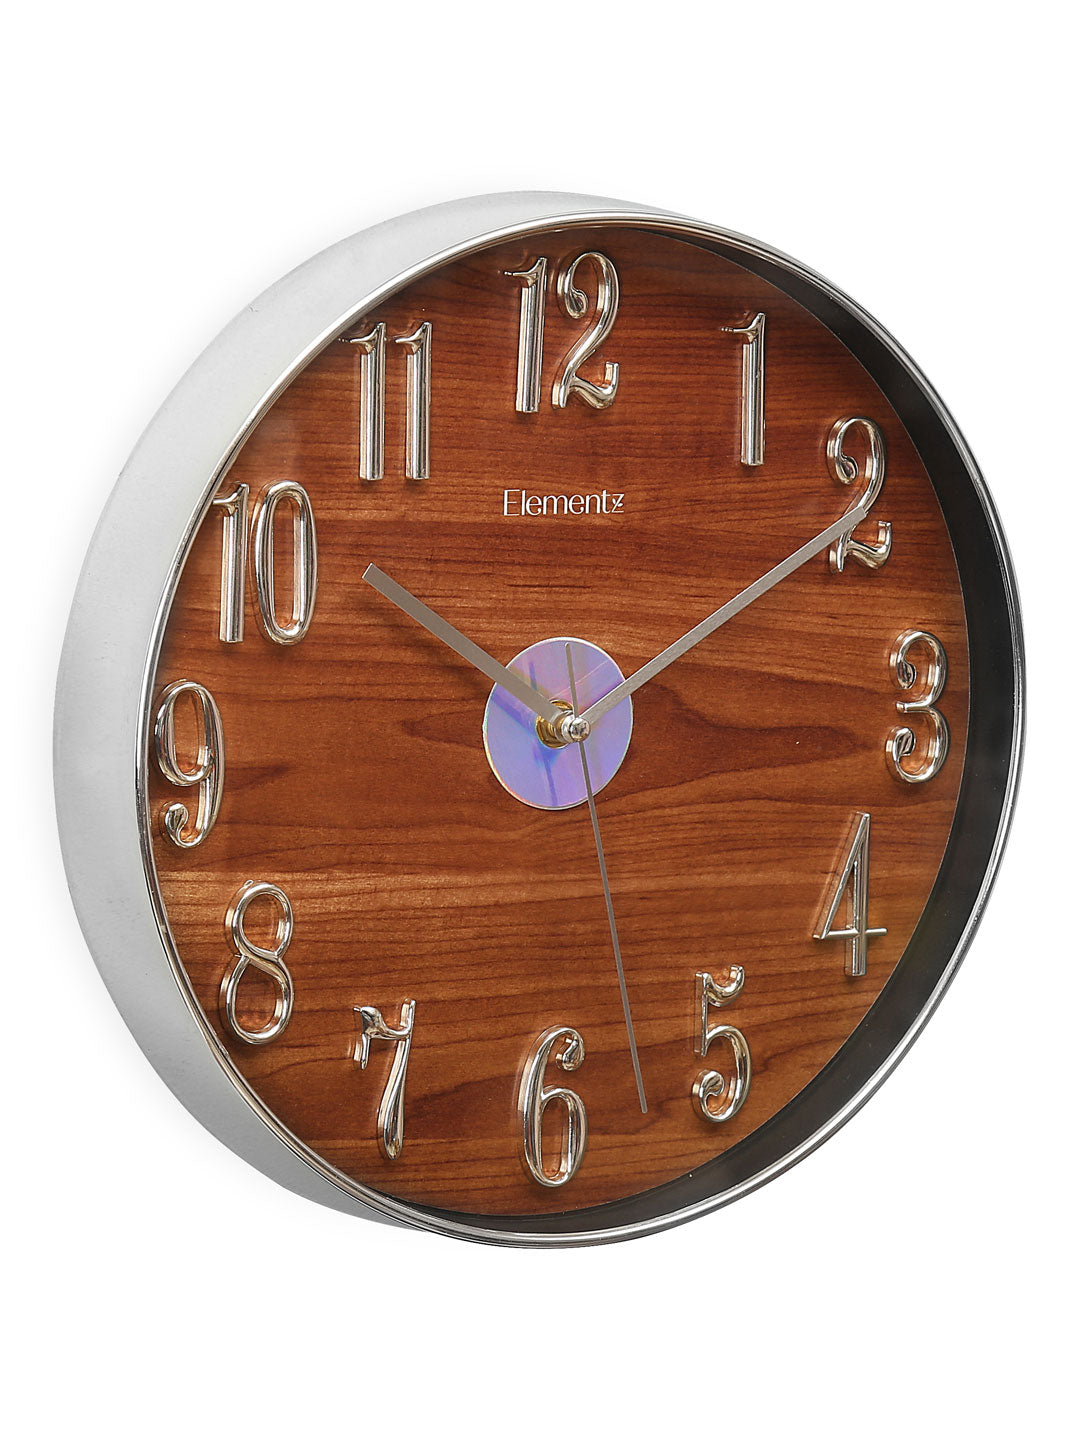 Timberland Wall Clock (Brown)